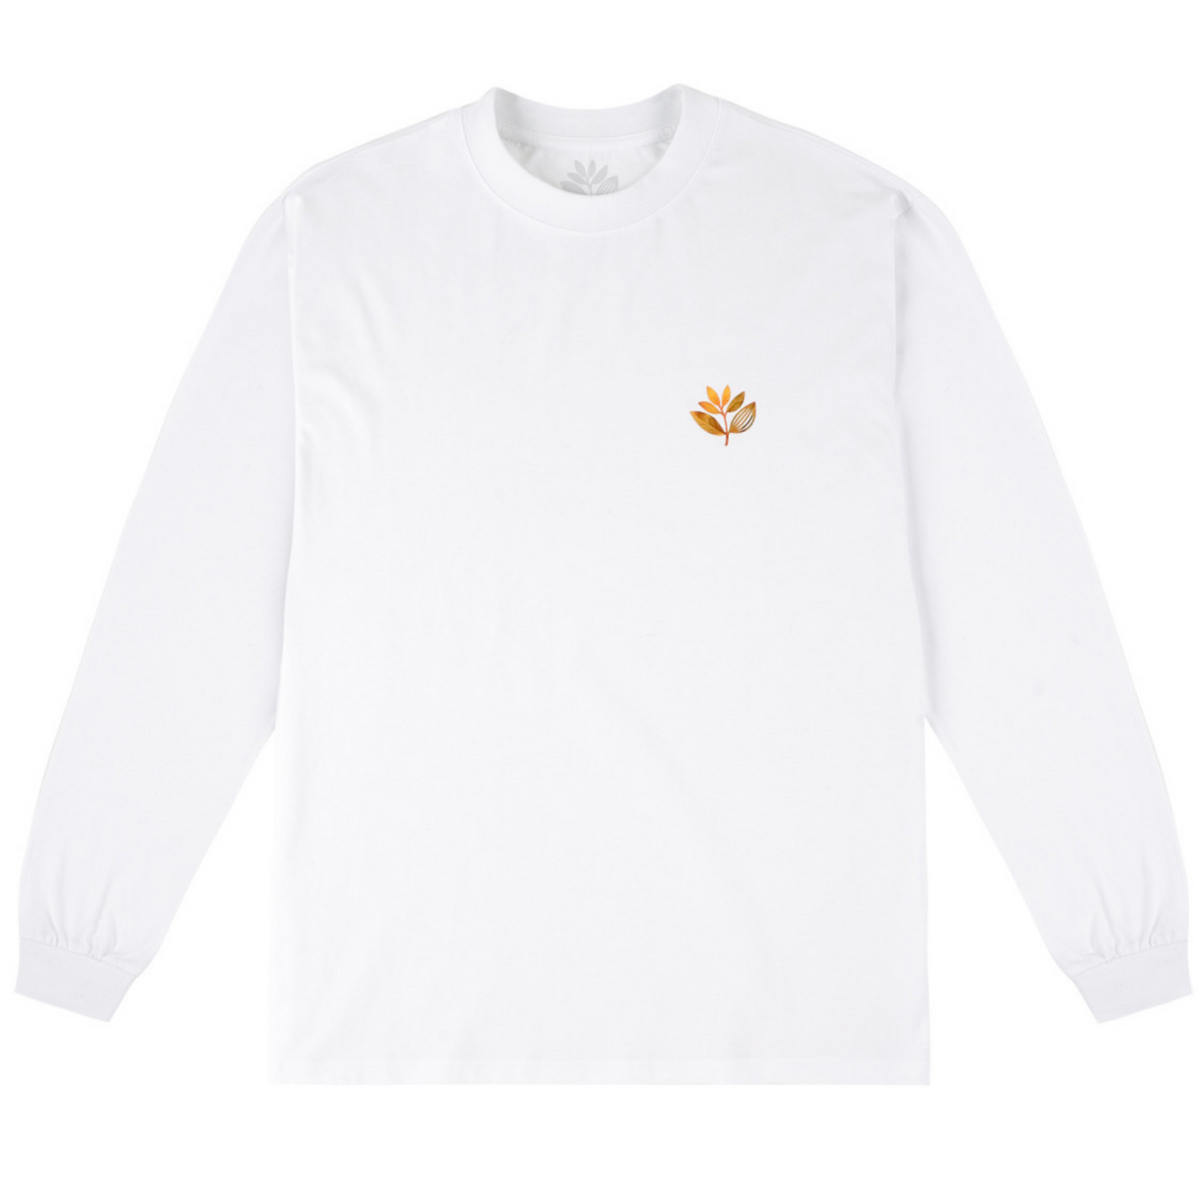 Magenta Magenta Skateboards Automne Long Sleeve T-Shirt | White | The Vines